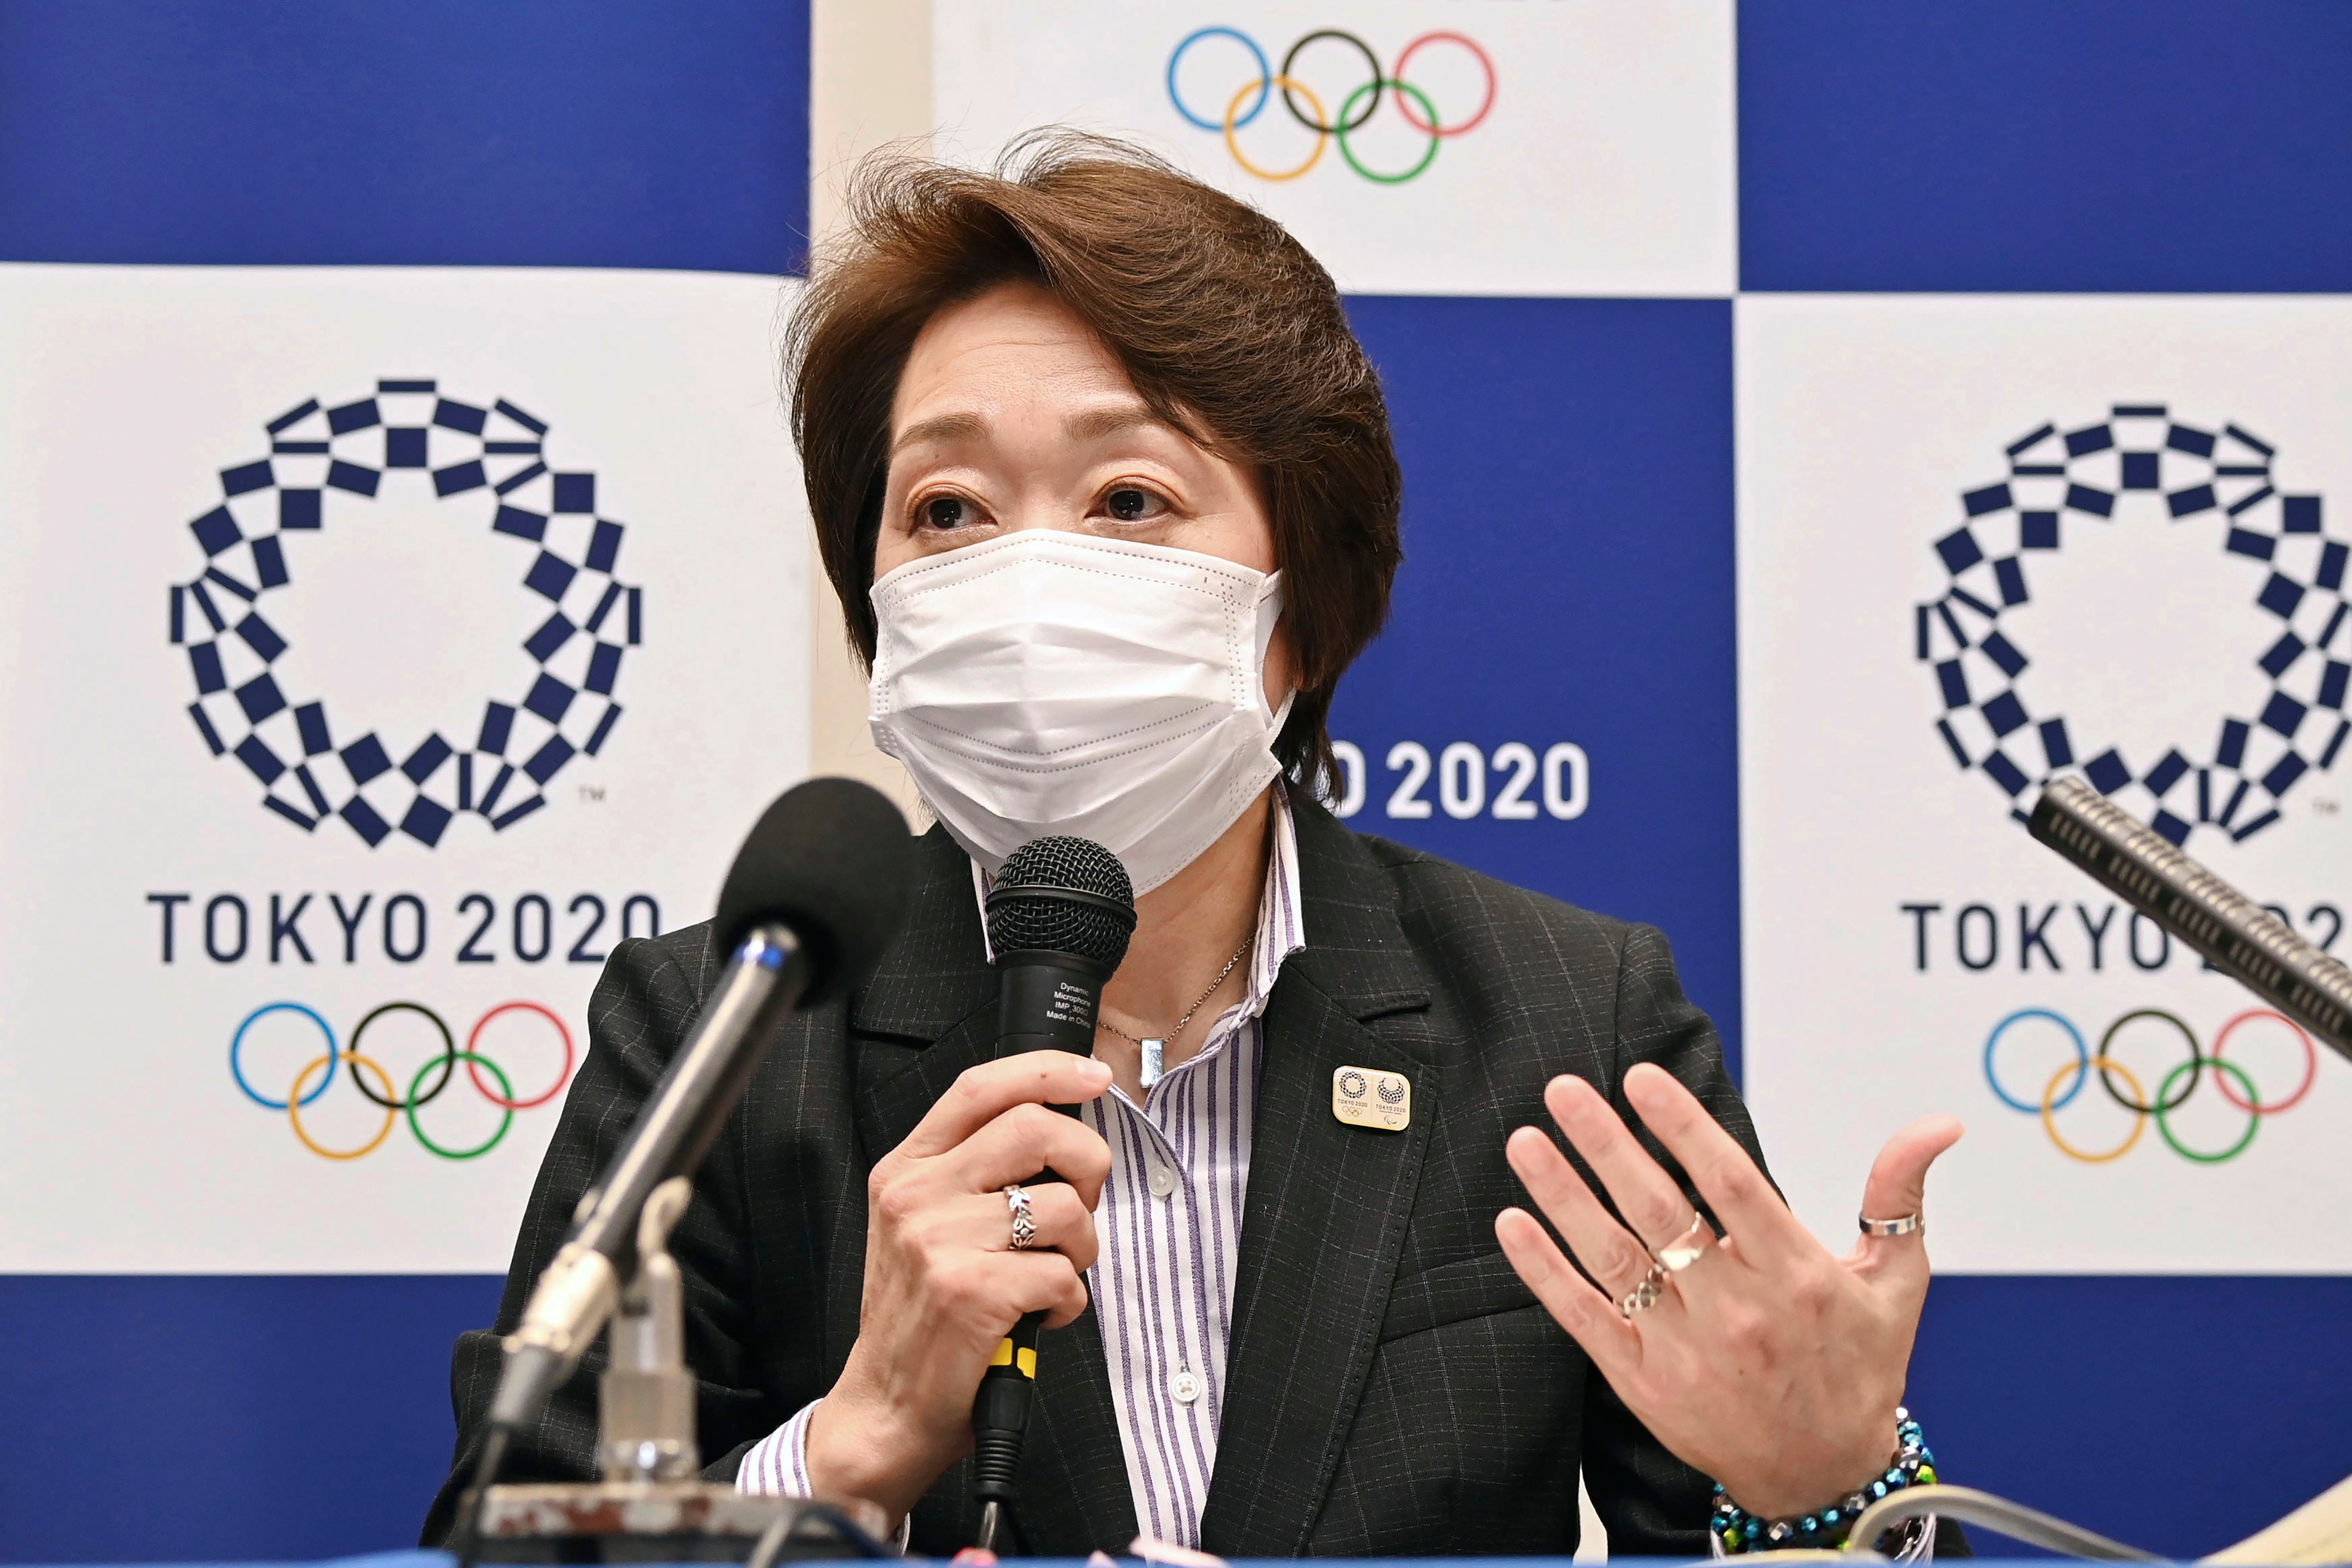 Tokyo 2020 president Seiko Hashimoto during a press conference